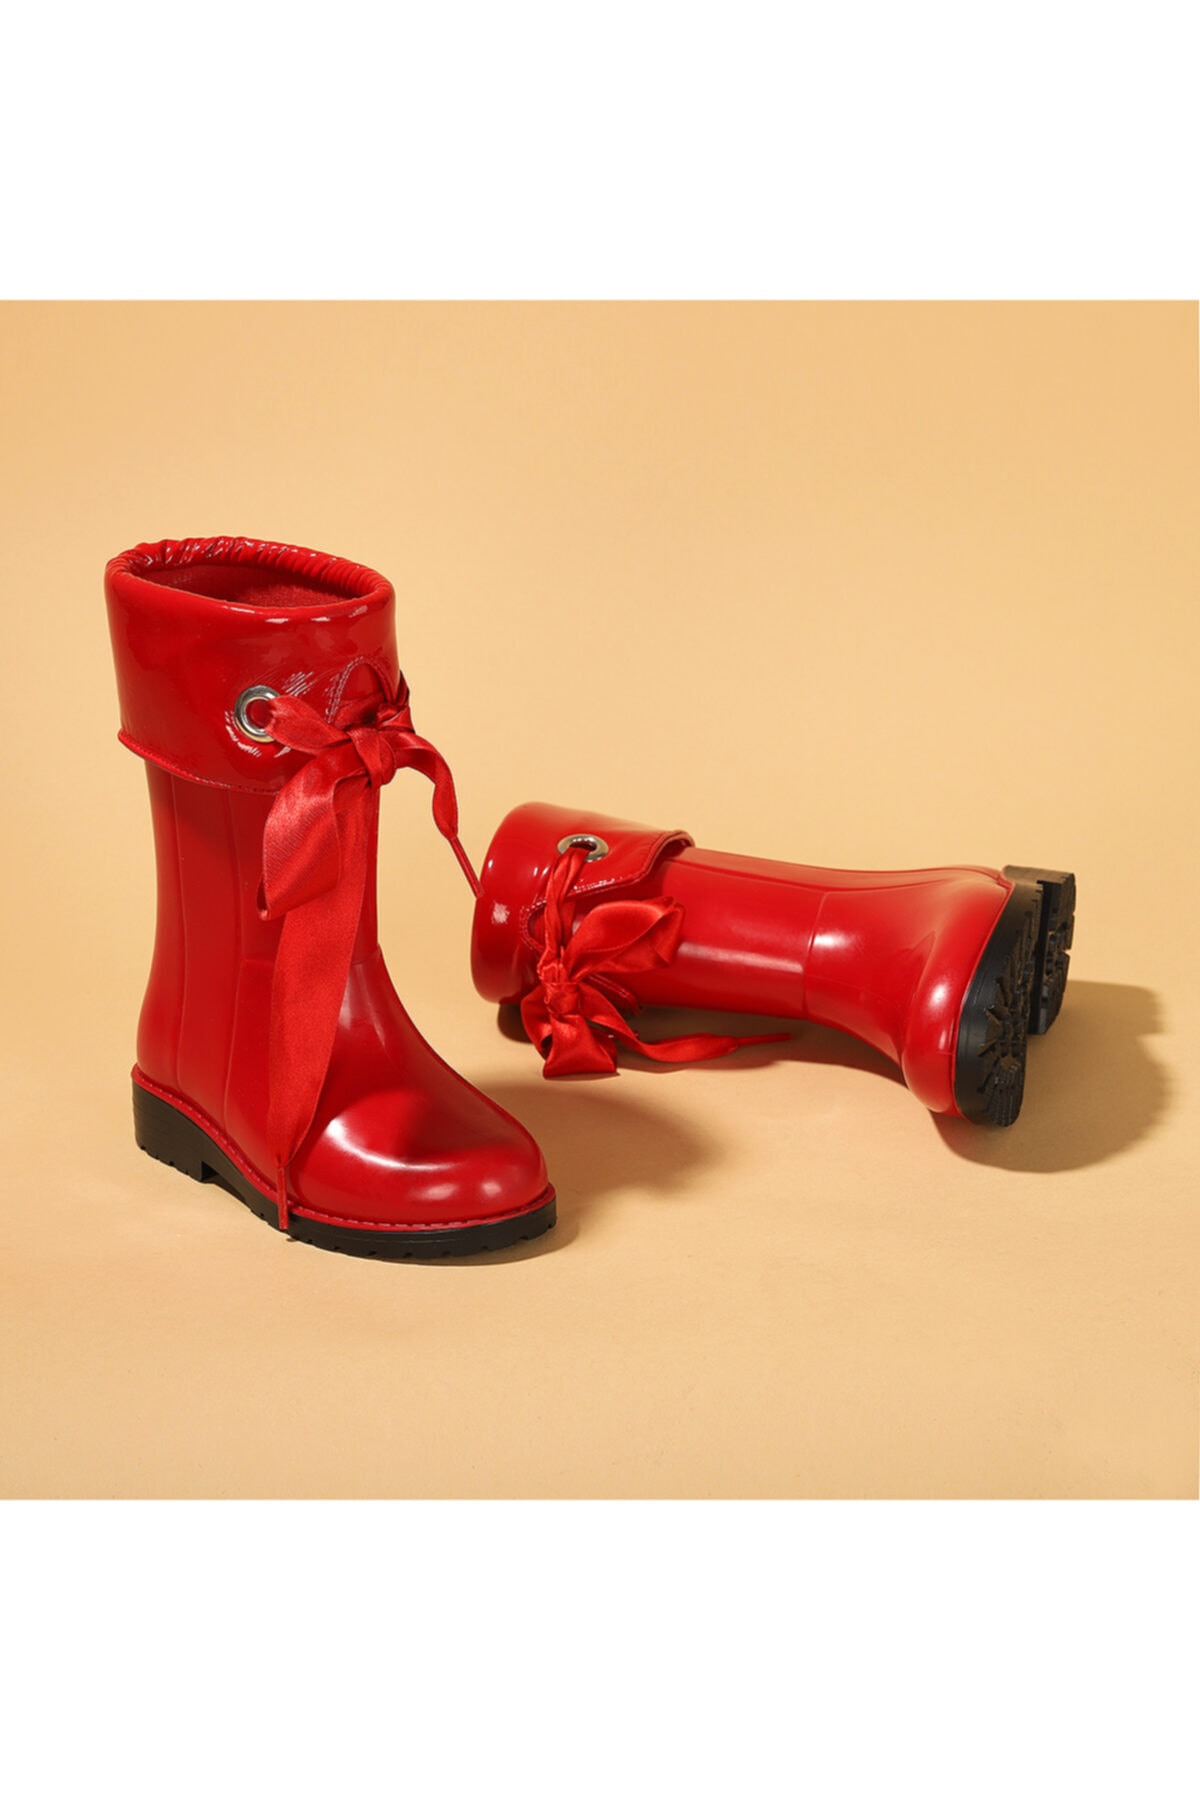 W10114 Campera Charol Kız Çocuk Su Geçirmez Yağmur Kar Çizmesi